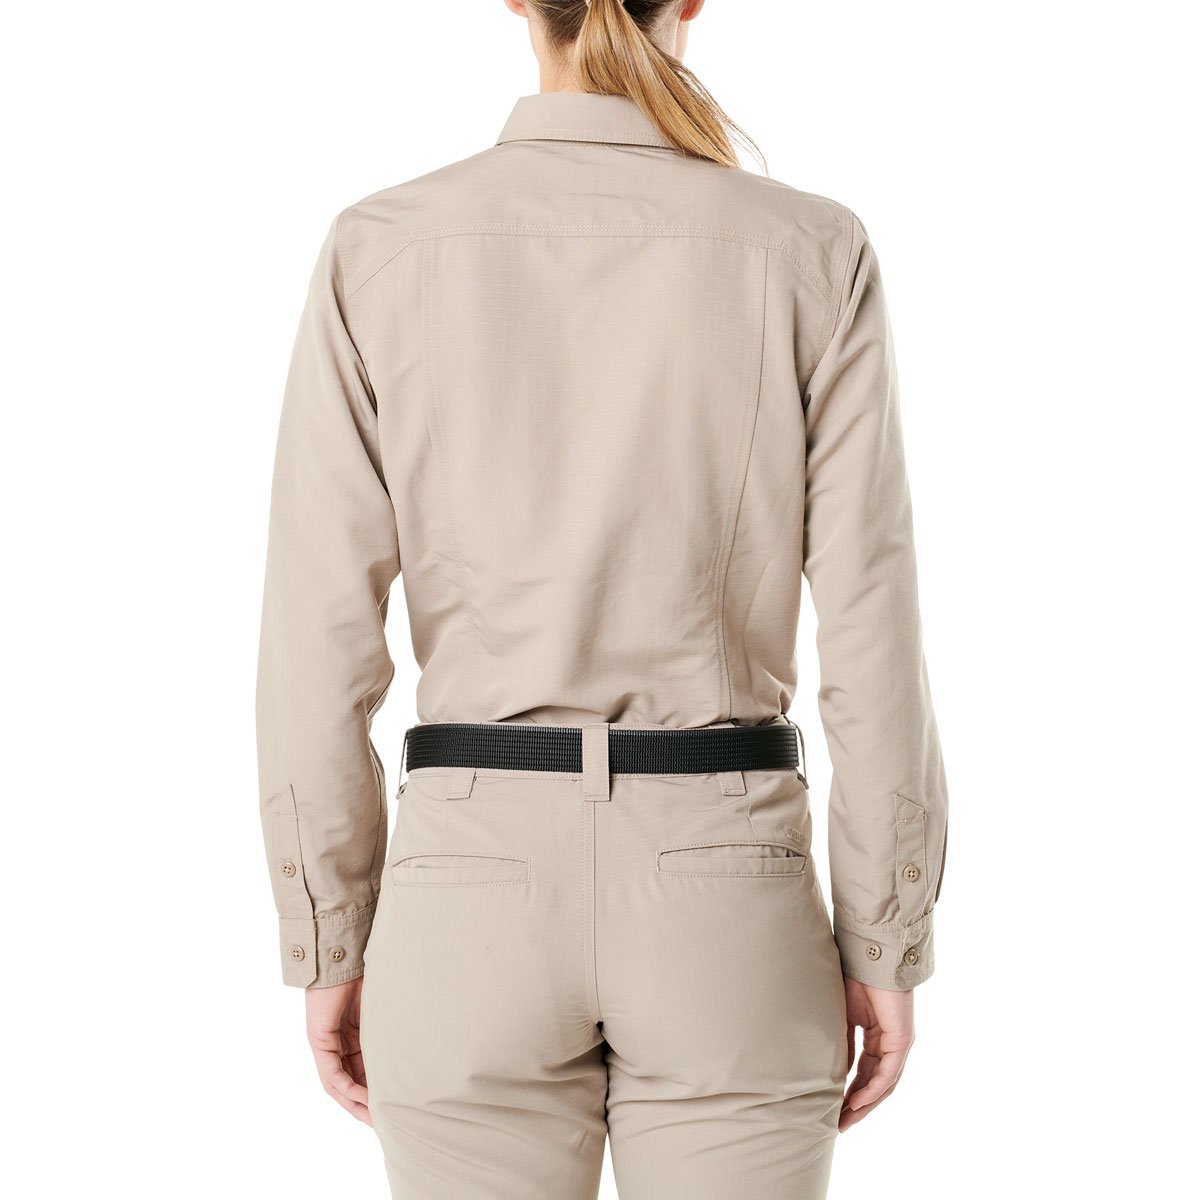 5.11 Tactical Women's Fast-Tac Long Sleeve Shirt Shirts 5.11 Tactical Tactical Gear Supplier Tactical Distributors Australia